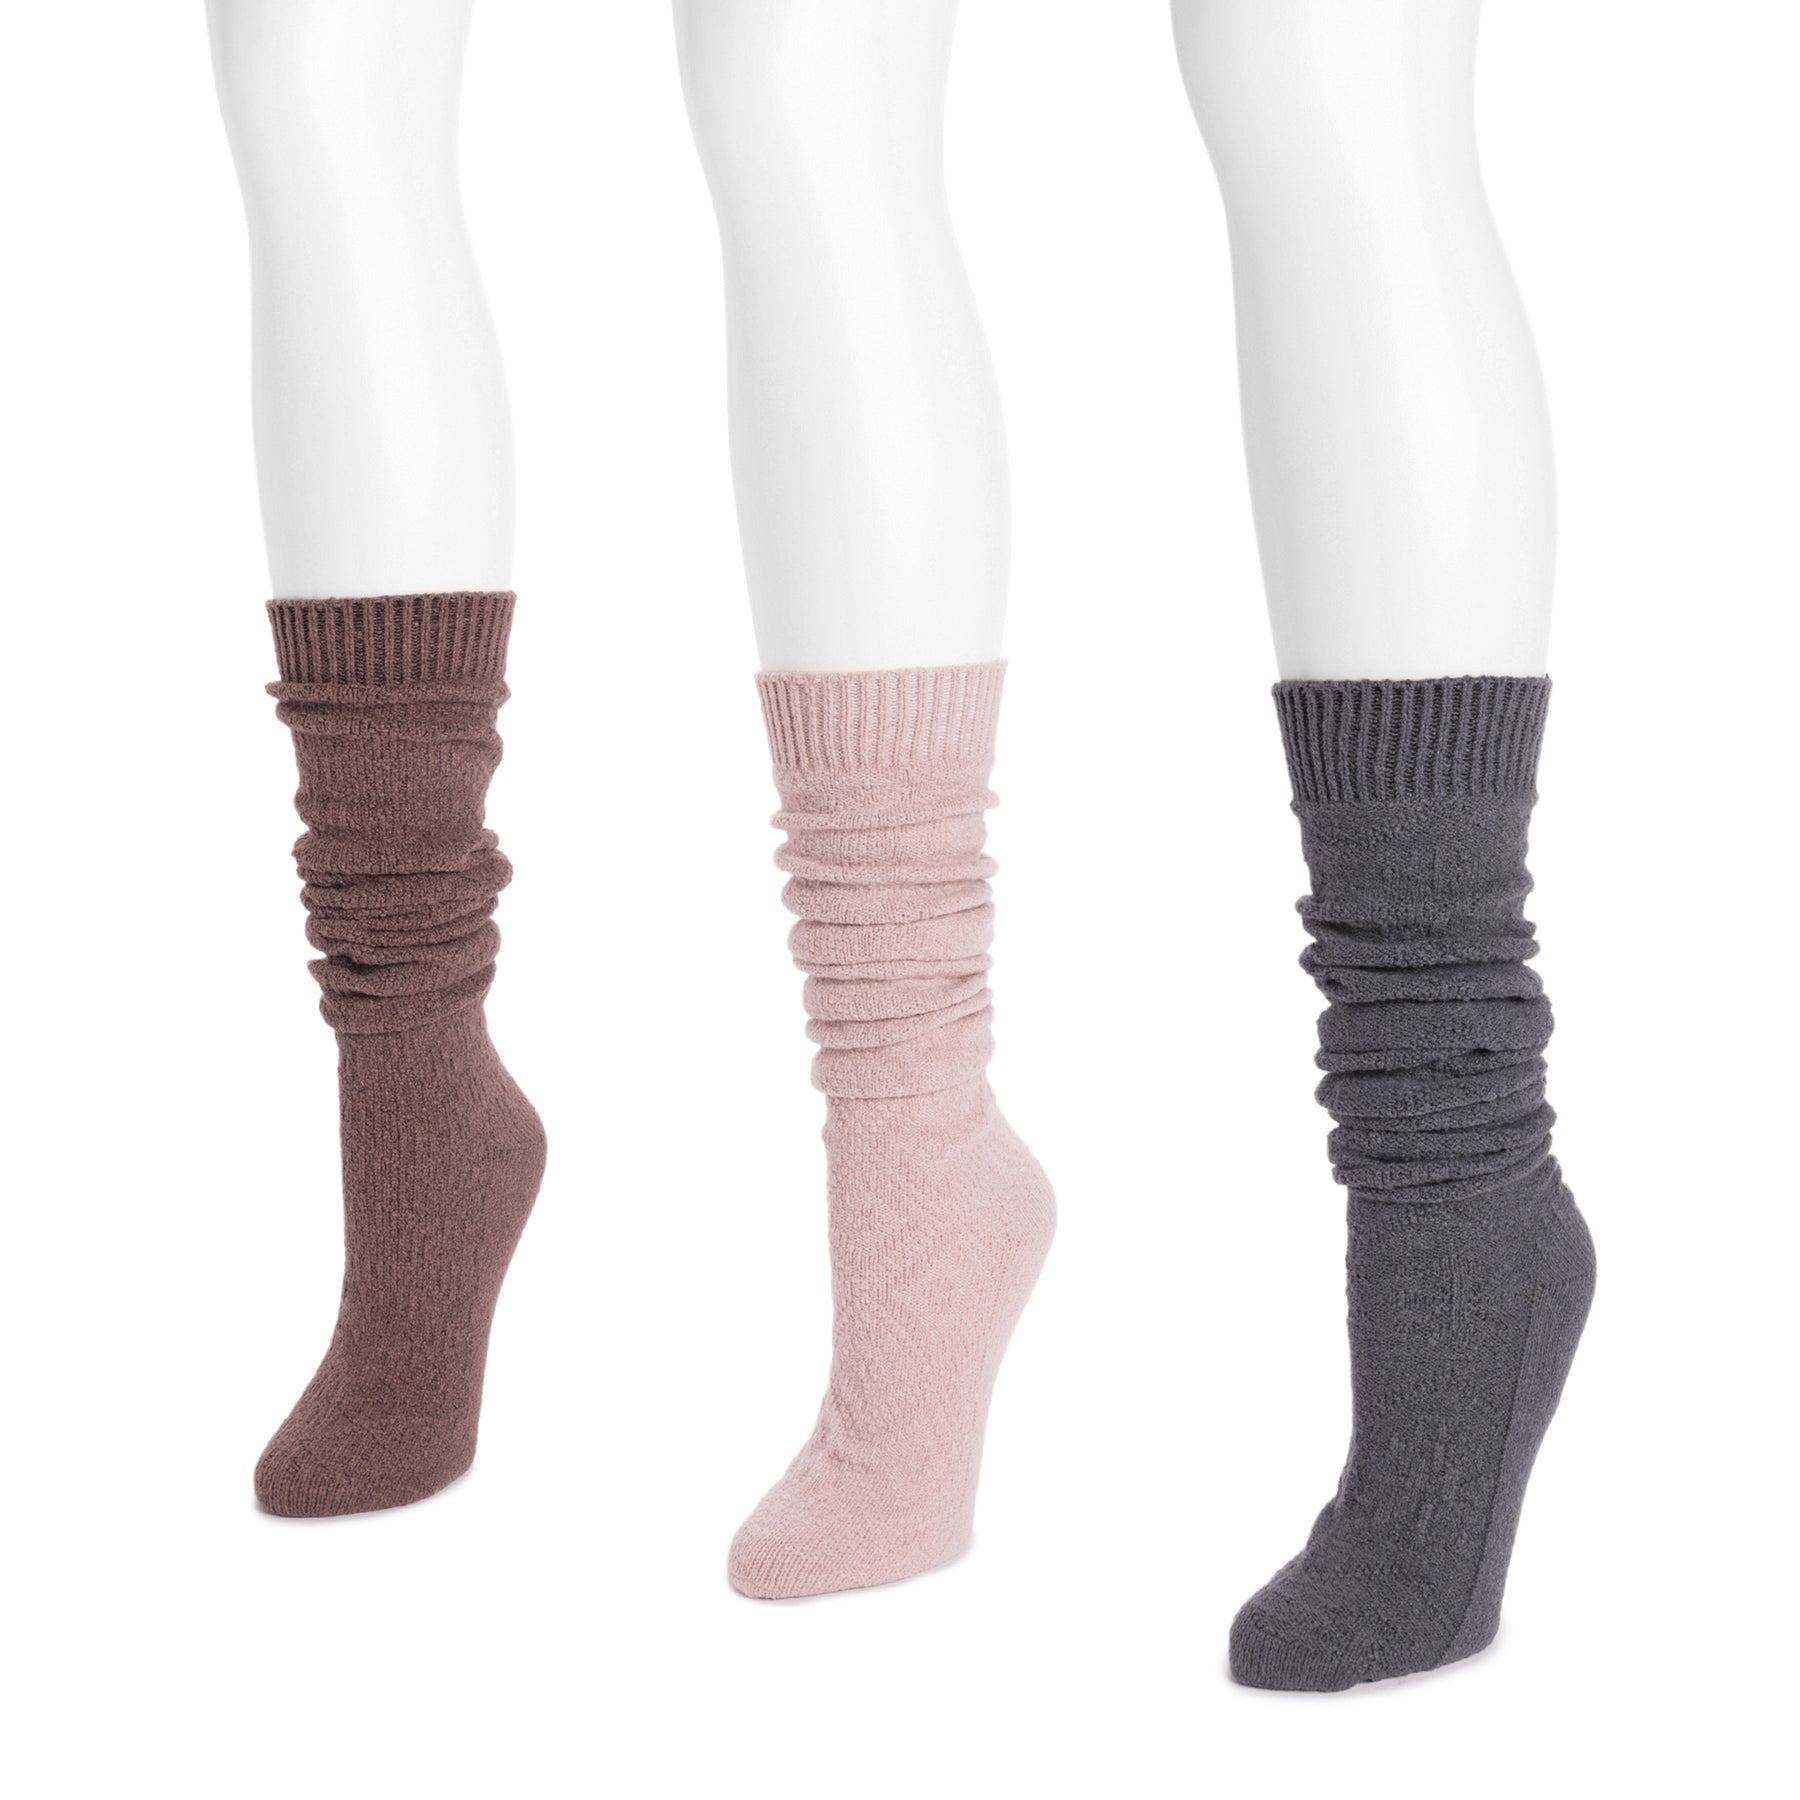 Muk Luks Women's Over The Knee Socks, 3 Pair